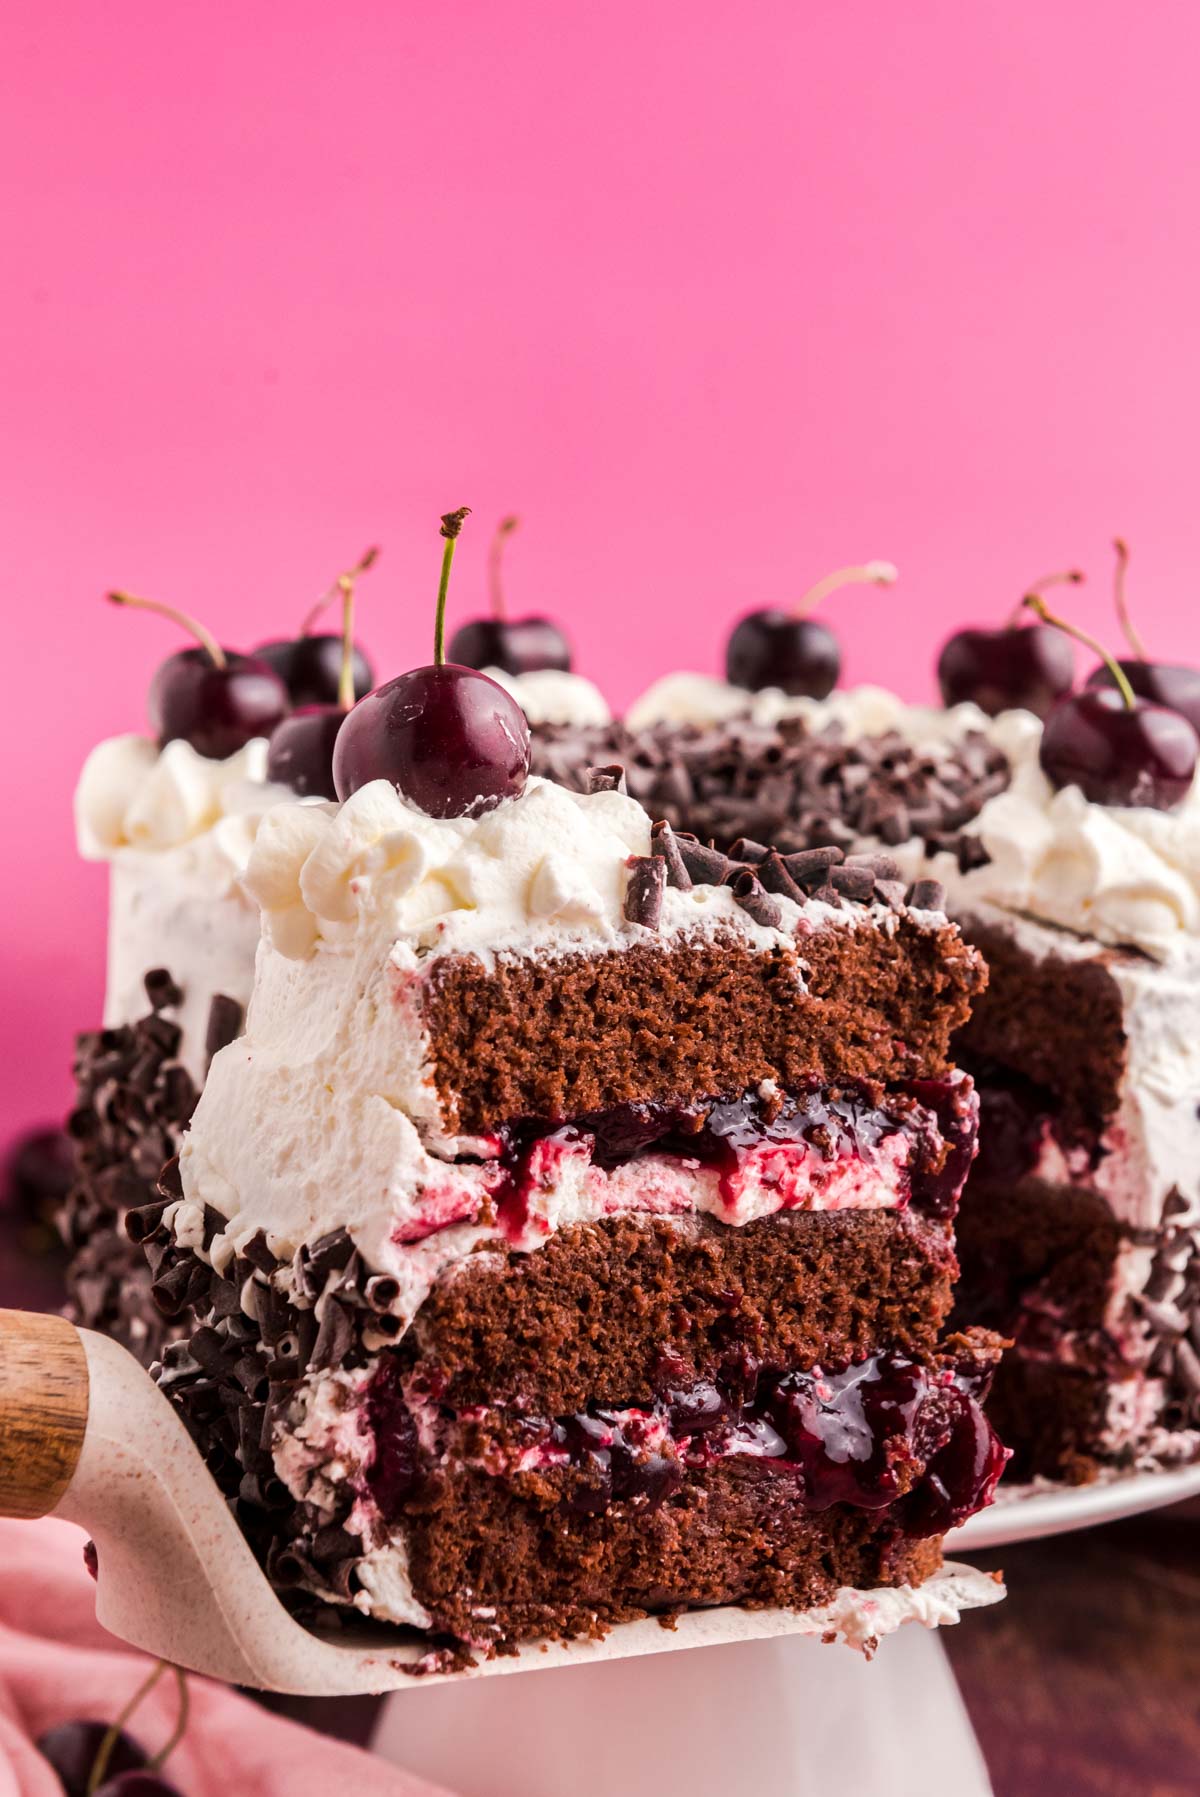 Black Forest Cake - Cherry Filling, Whipped Cream Frosting - Veena Azmanov